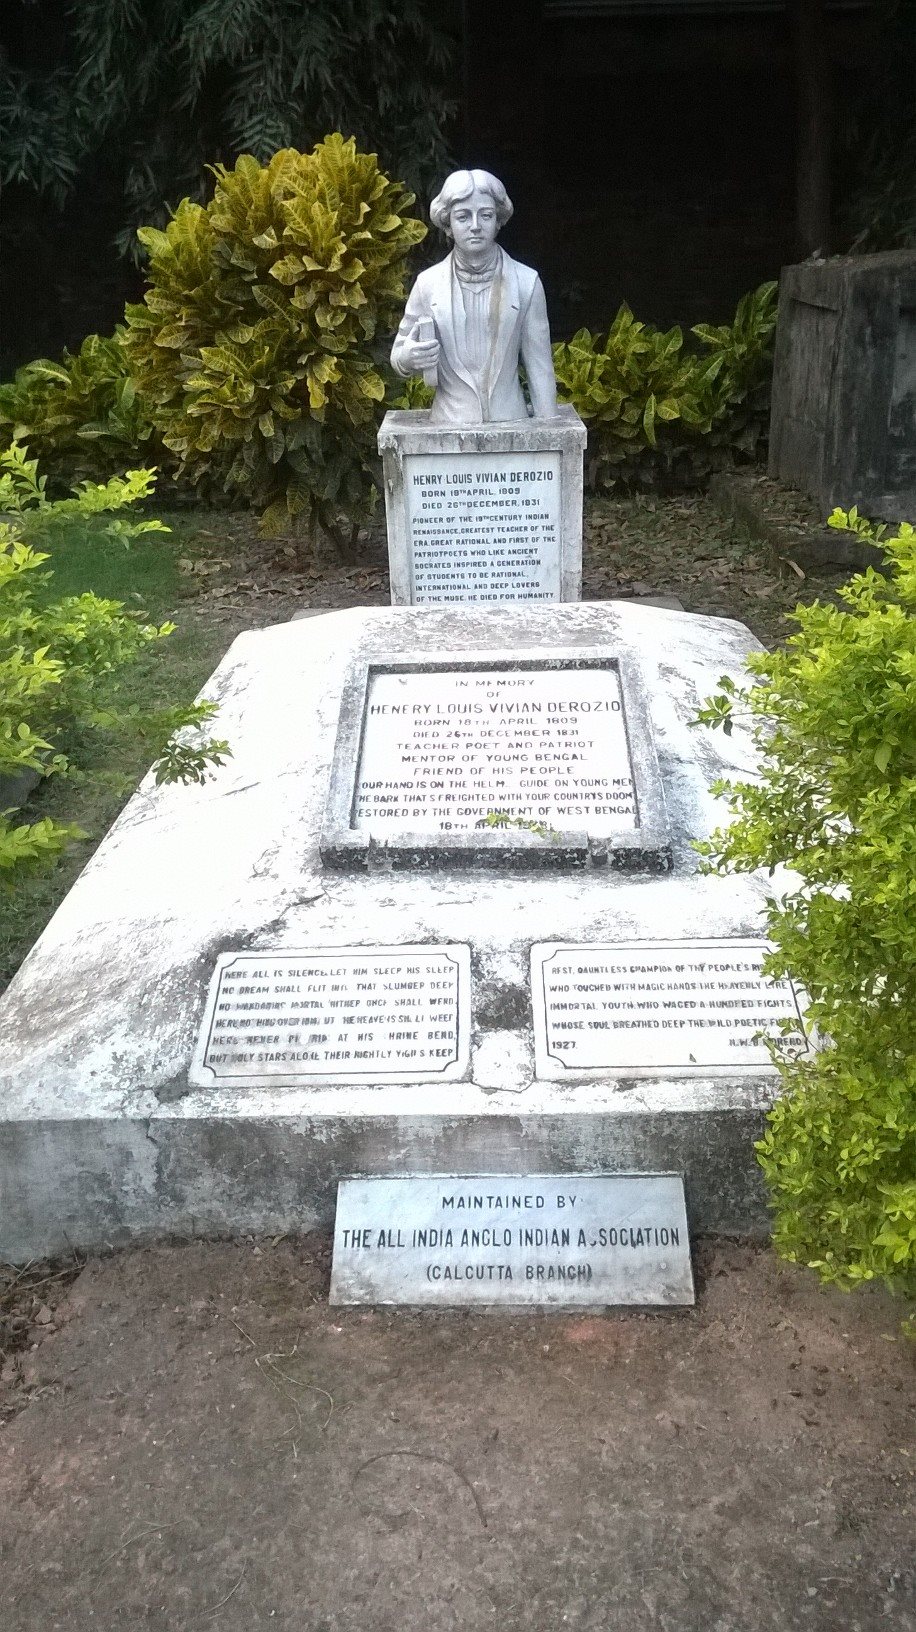 Derozio's Grave